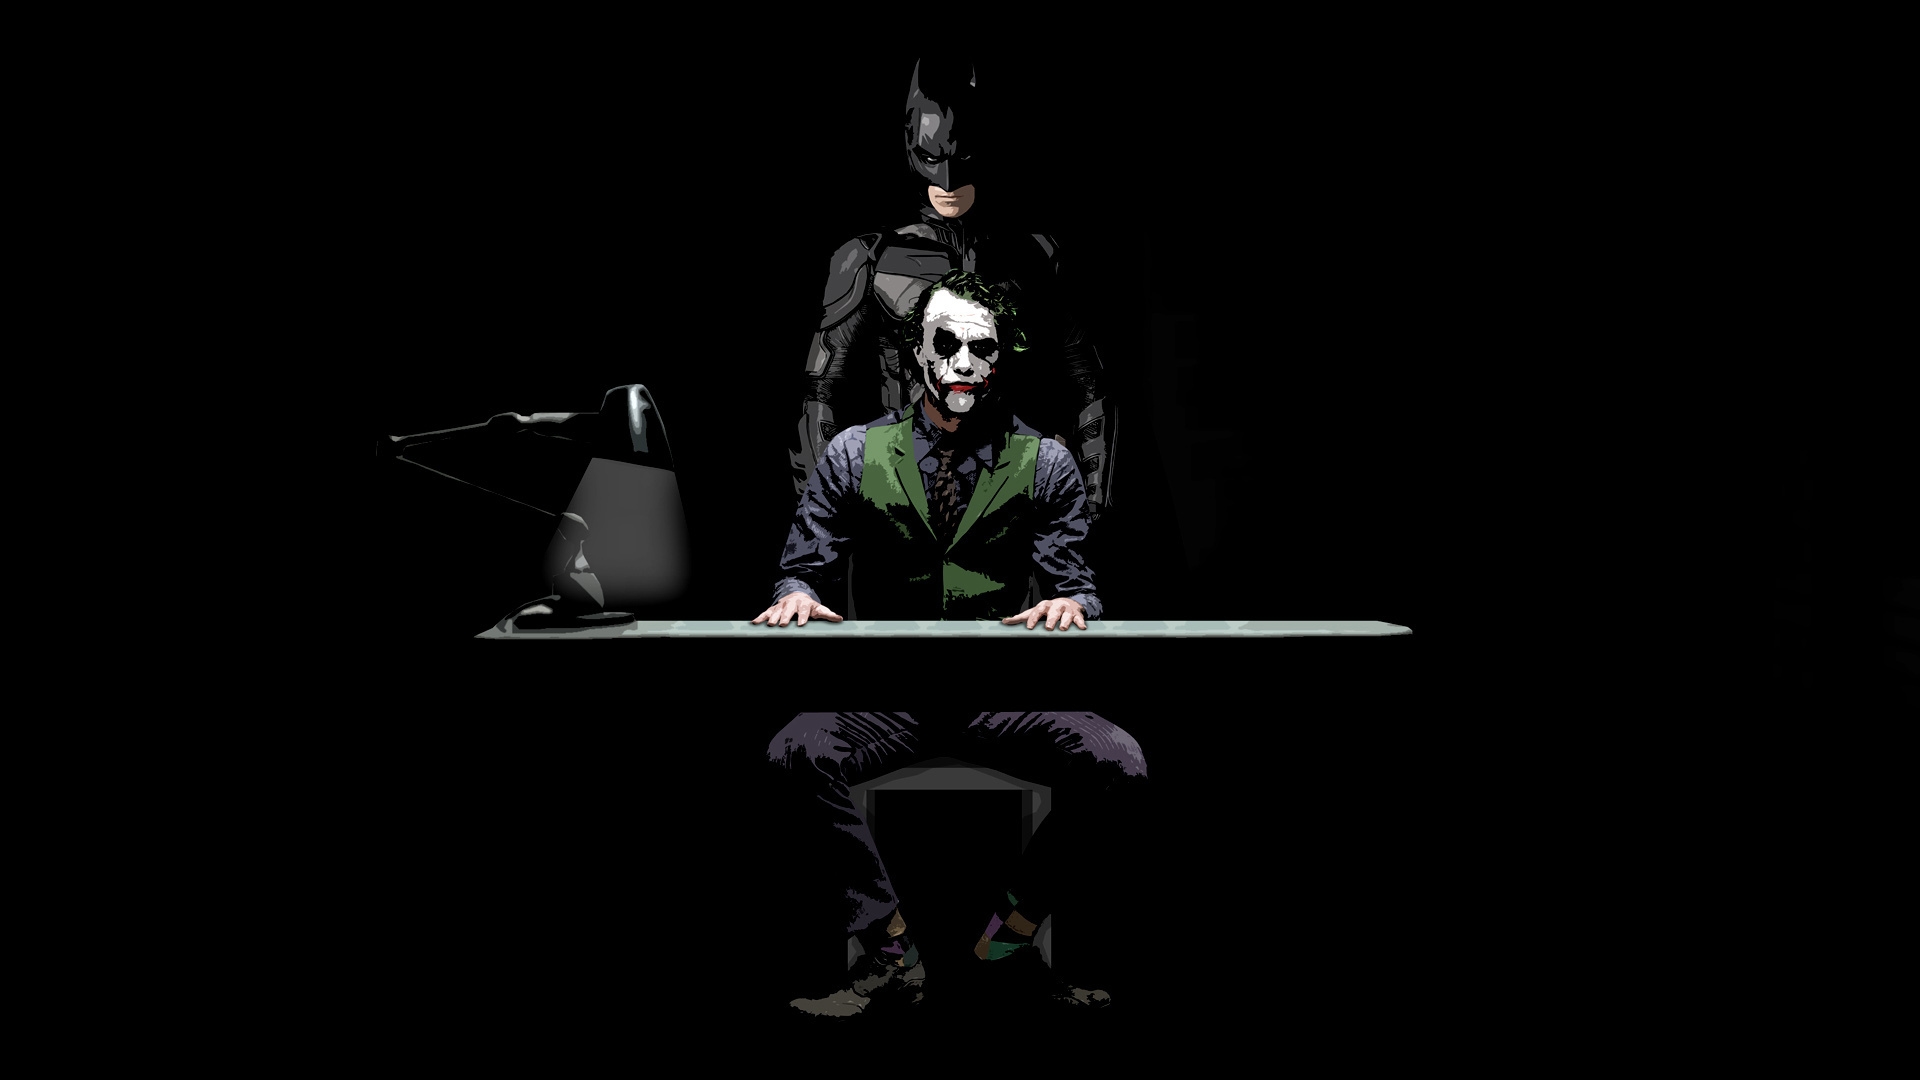 Batman and Joker Sketch 3D Wallpaper   HQ Free Wallpapers download 100